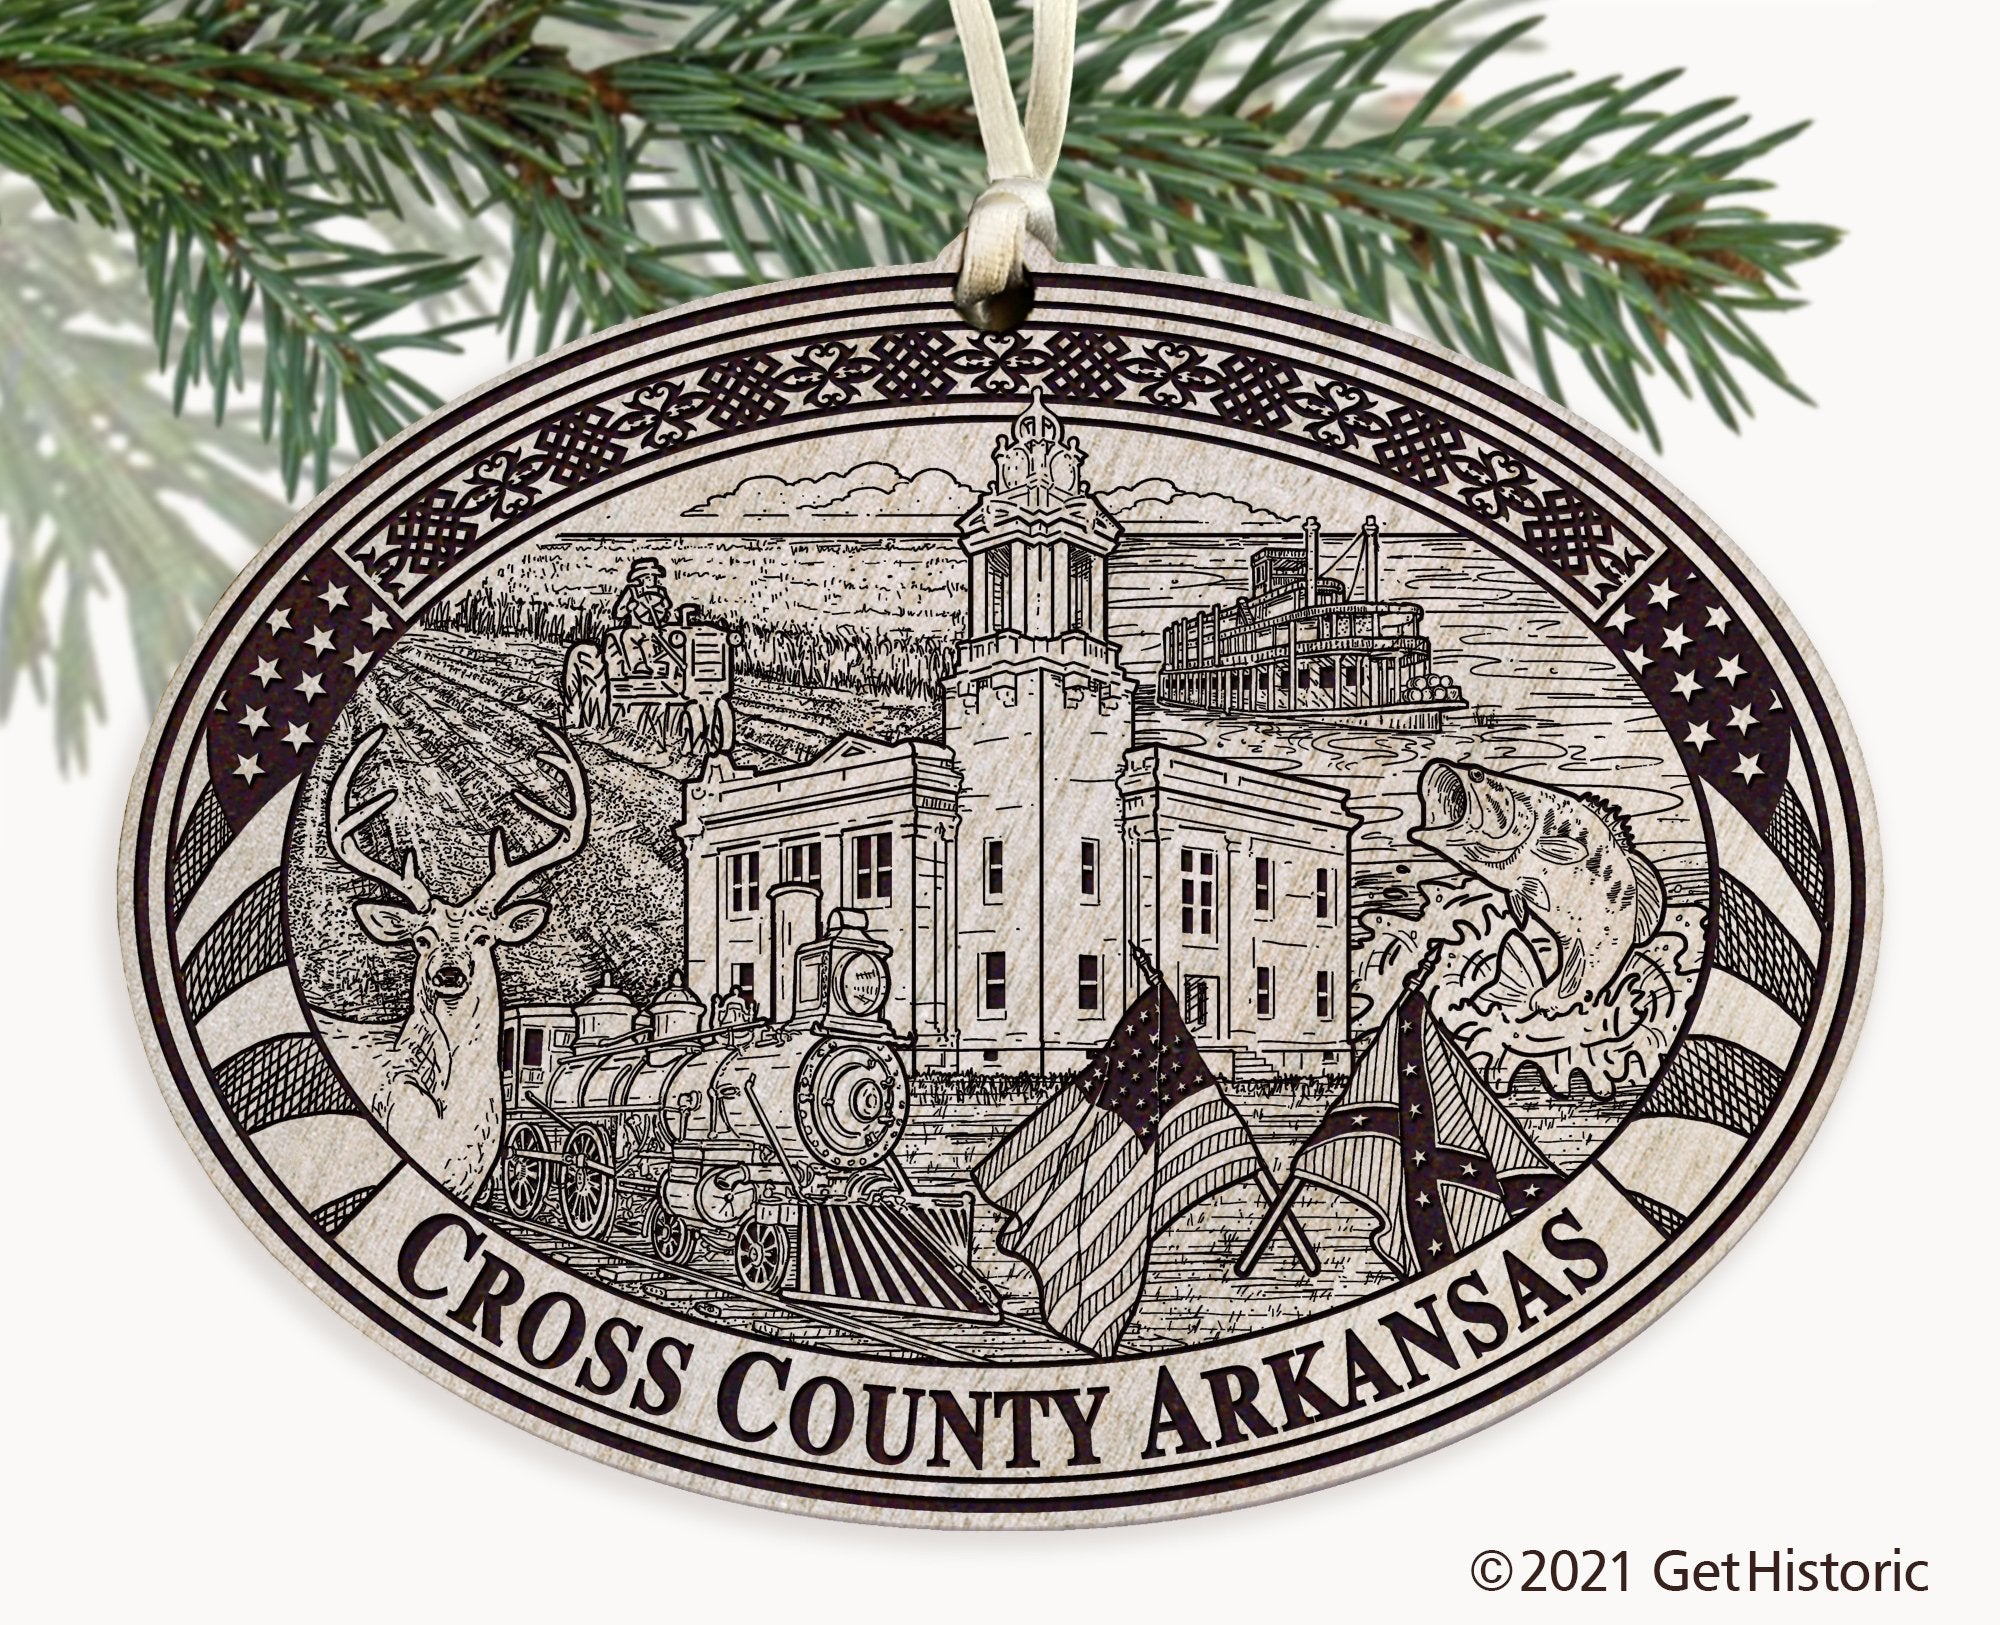 Cross County Arkansas Engraved Ornament